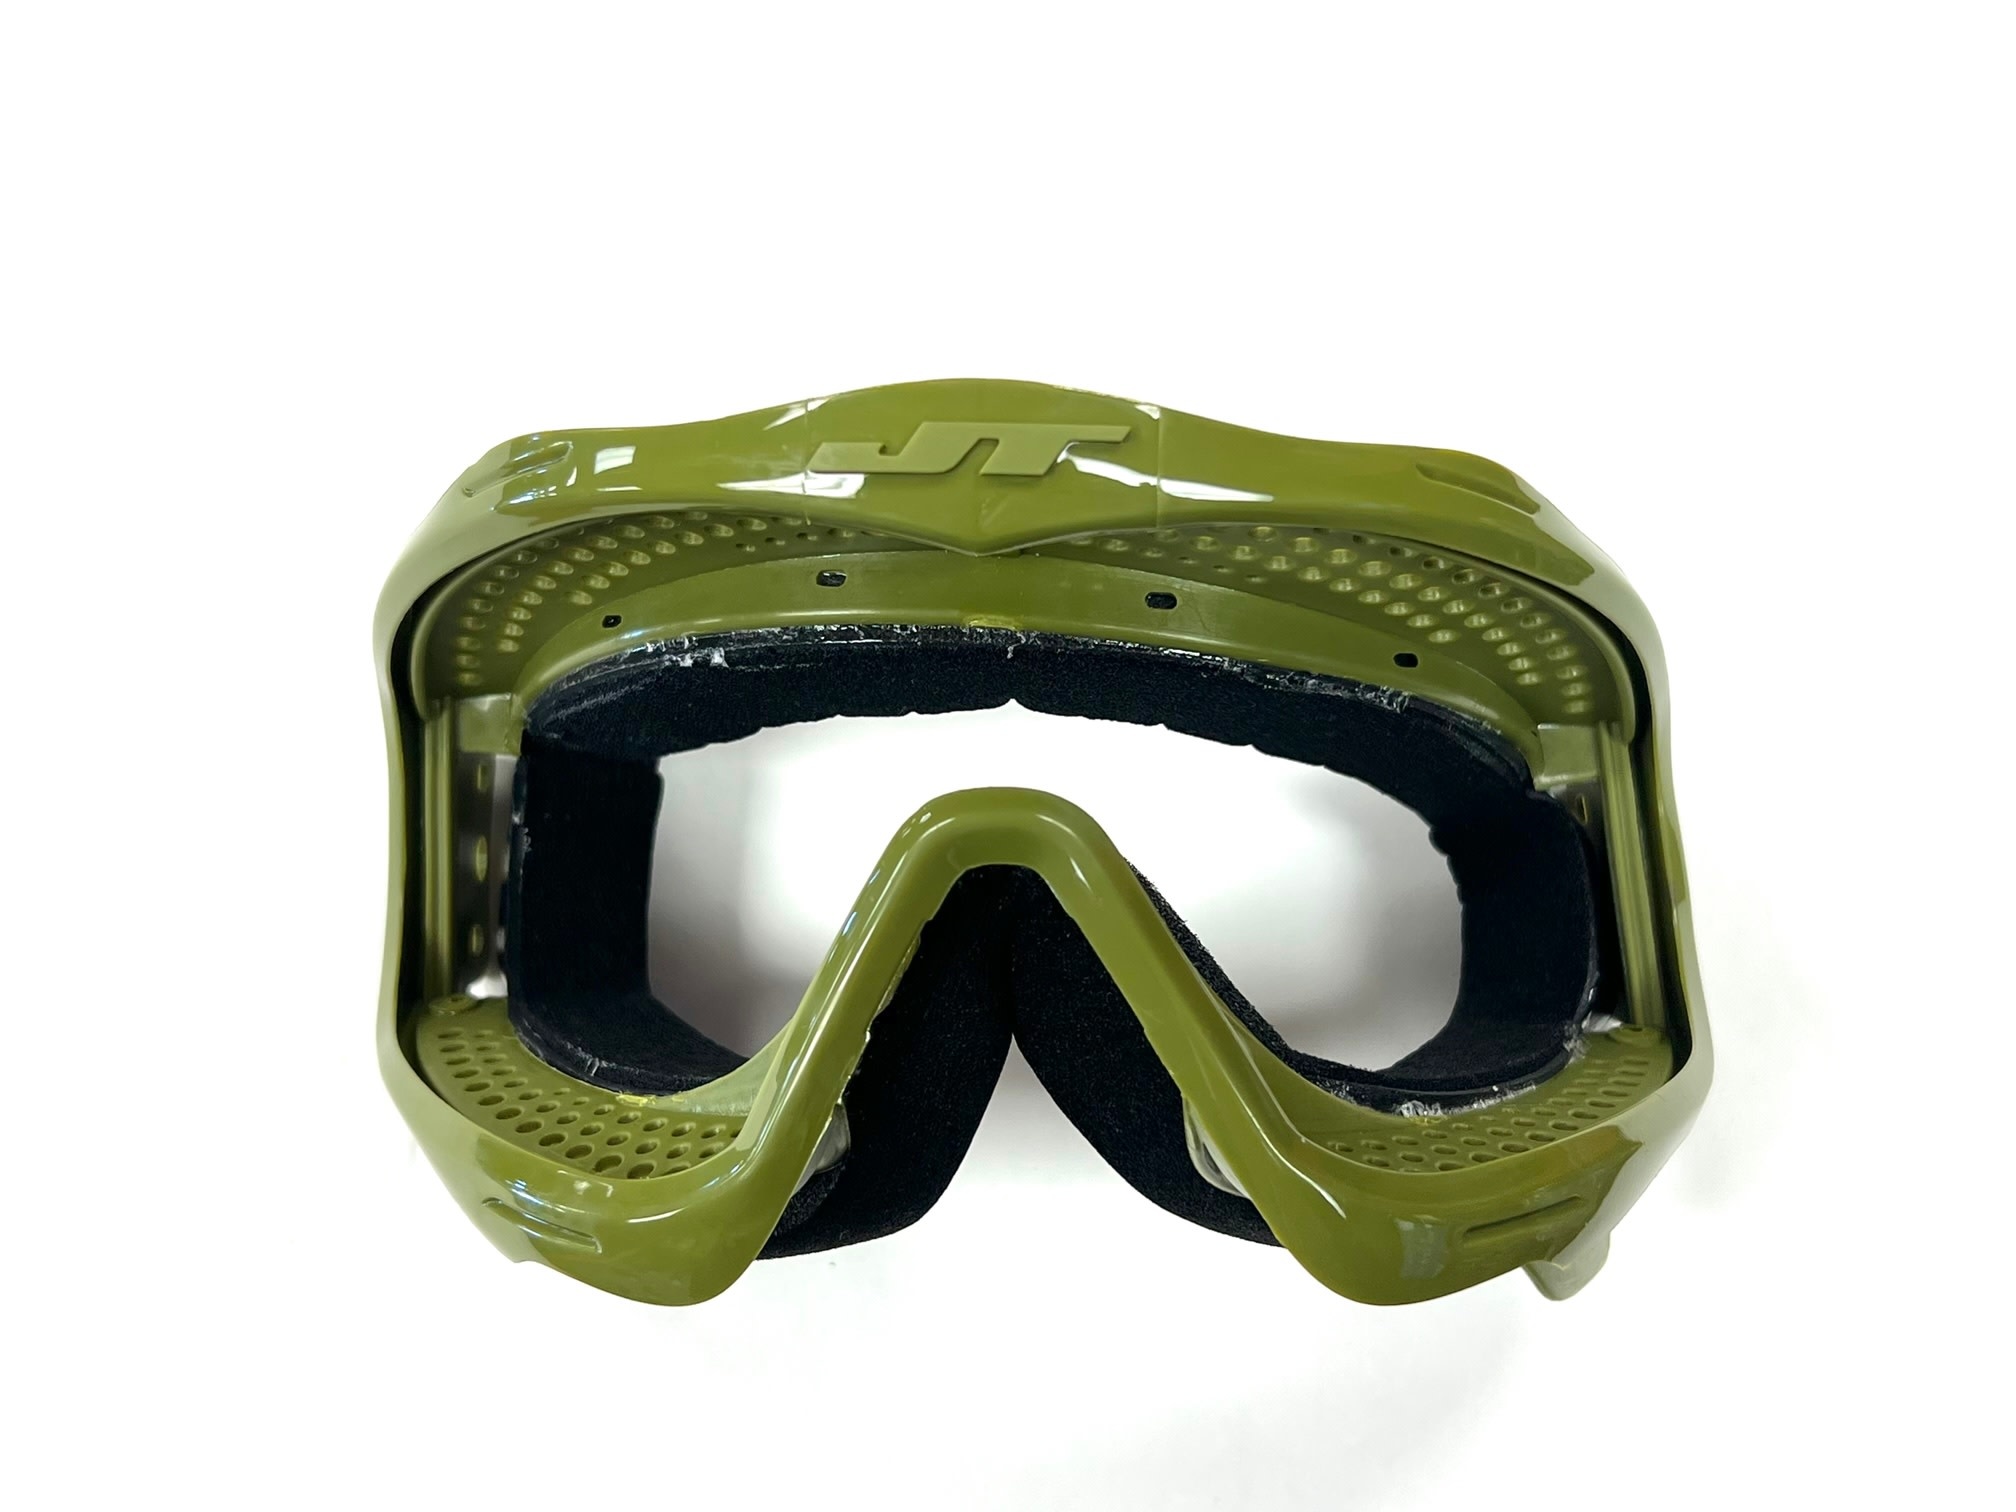 Jt Flex 8 Full Coverage Paintball Mask - Olive